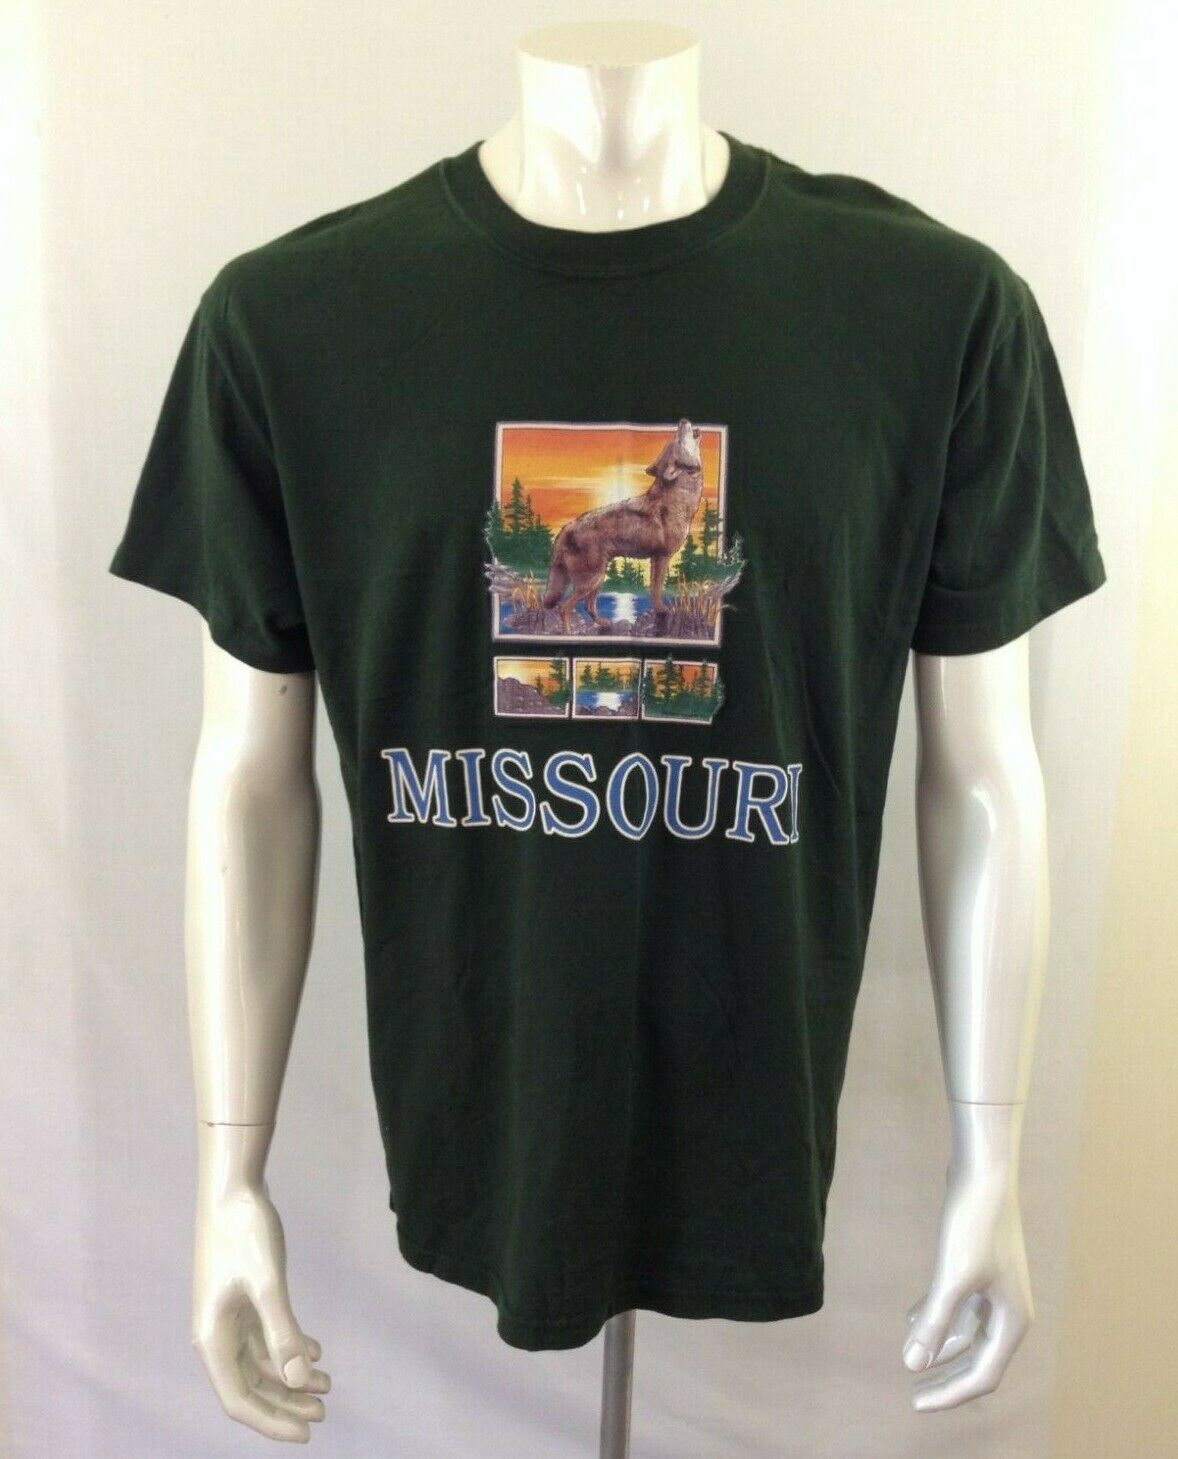 Missouri Tee Men's Size Large Green Short Sleeve Gildan Cotton Graphic T Shirt - $8.90